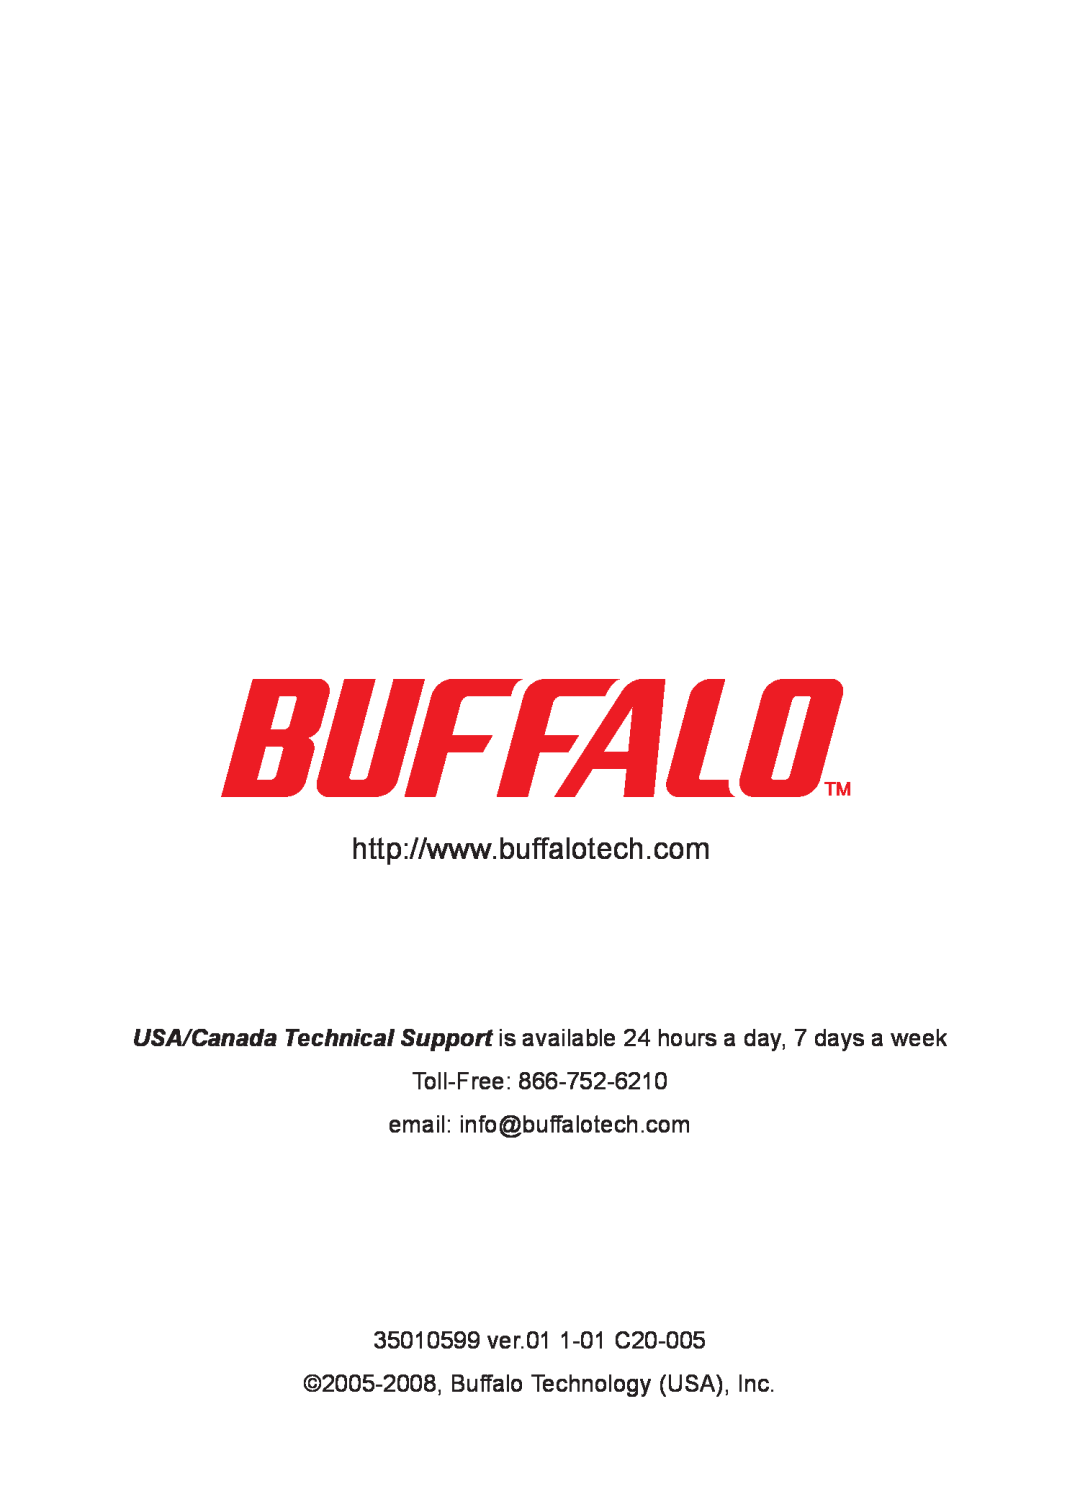 Buffalo Technology LS-QL/R5 setup guide Toll-Free email info@buffalotech.com 